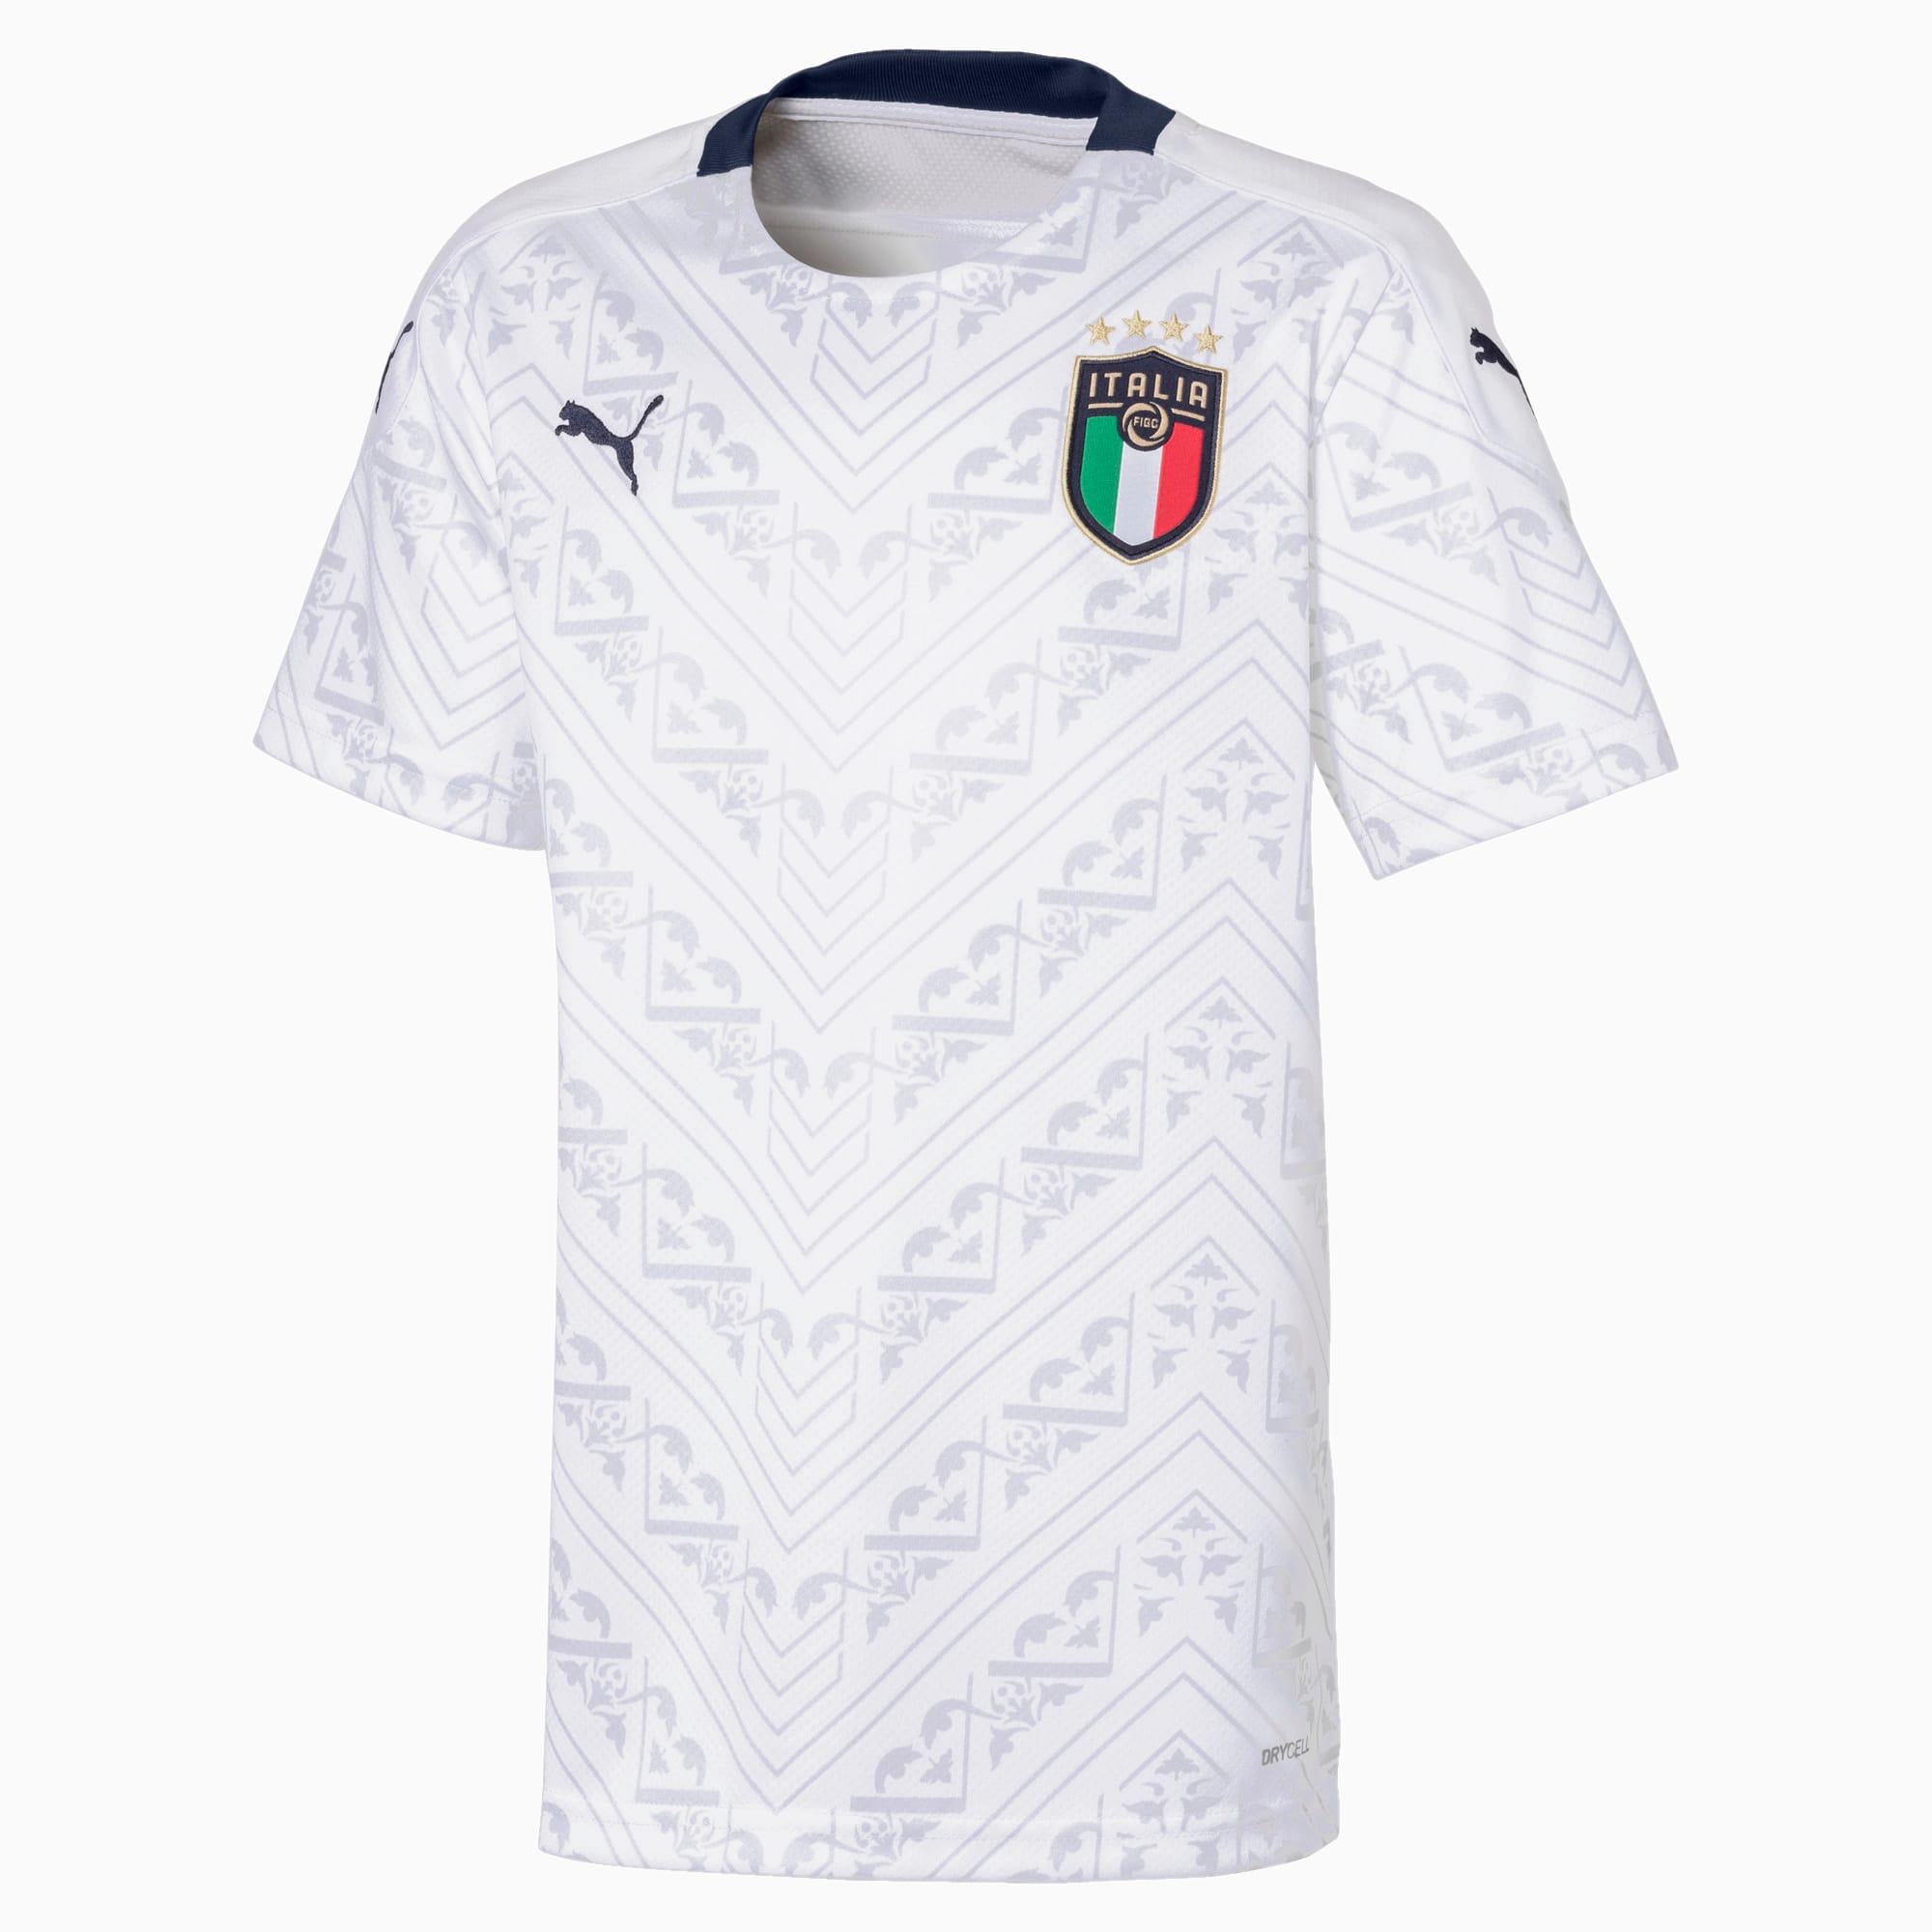 puma italia shirt